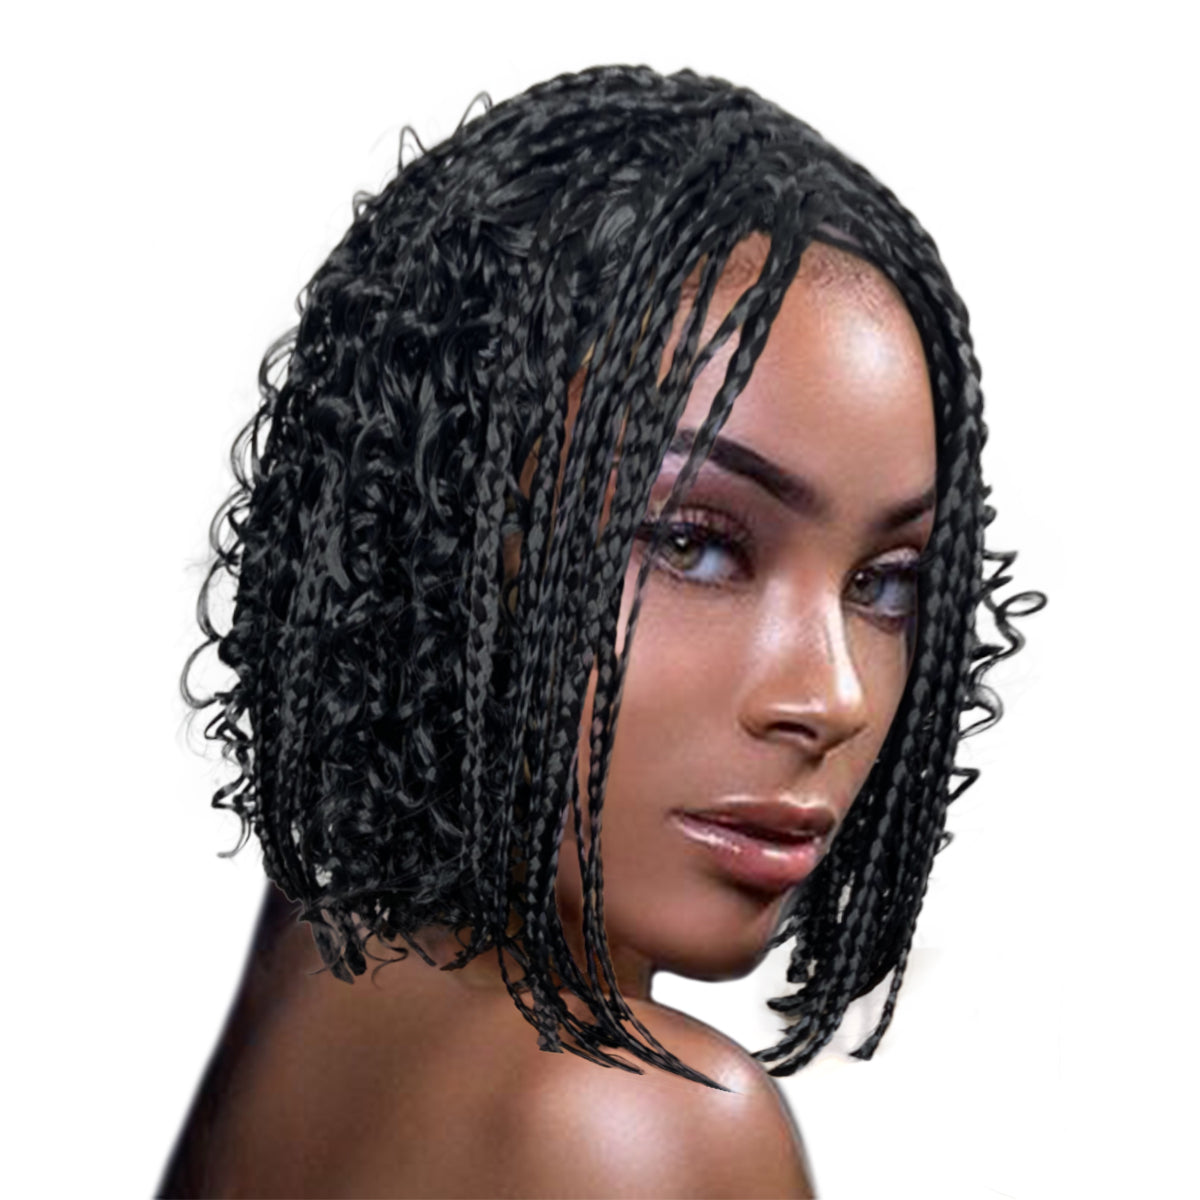 Braided Wig For Black Women, Short Bob Braids, Micro Braids, Lace